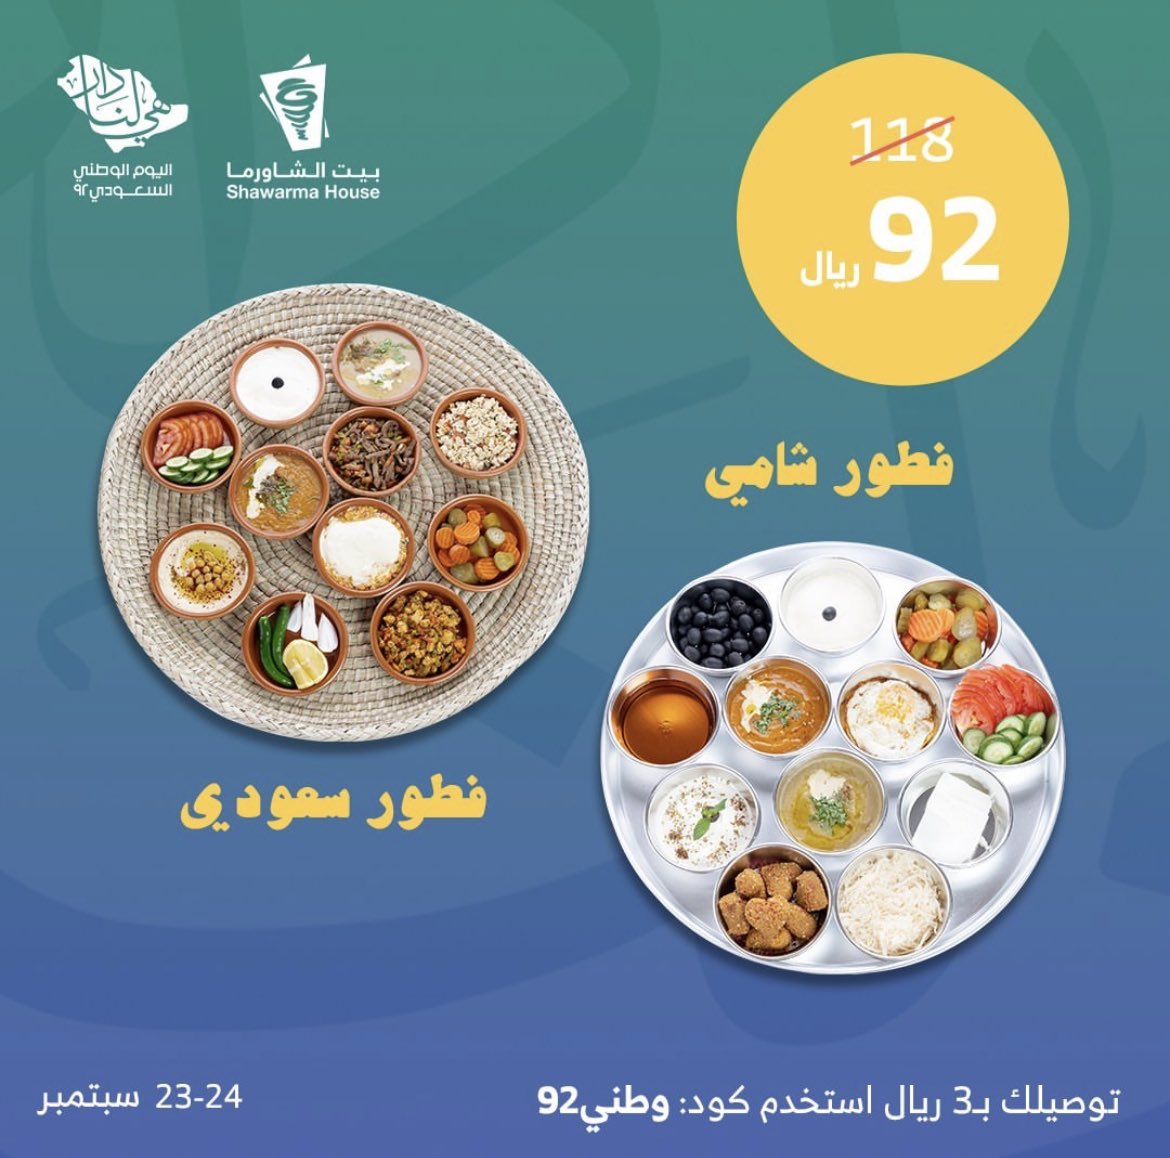 FdNTHQuX0AAWXqV2 - عروض اليوم الوطني 92 : عروض مطاعم السعودية (محدث بالعروض الجديدة)